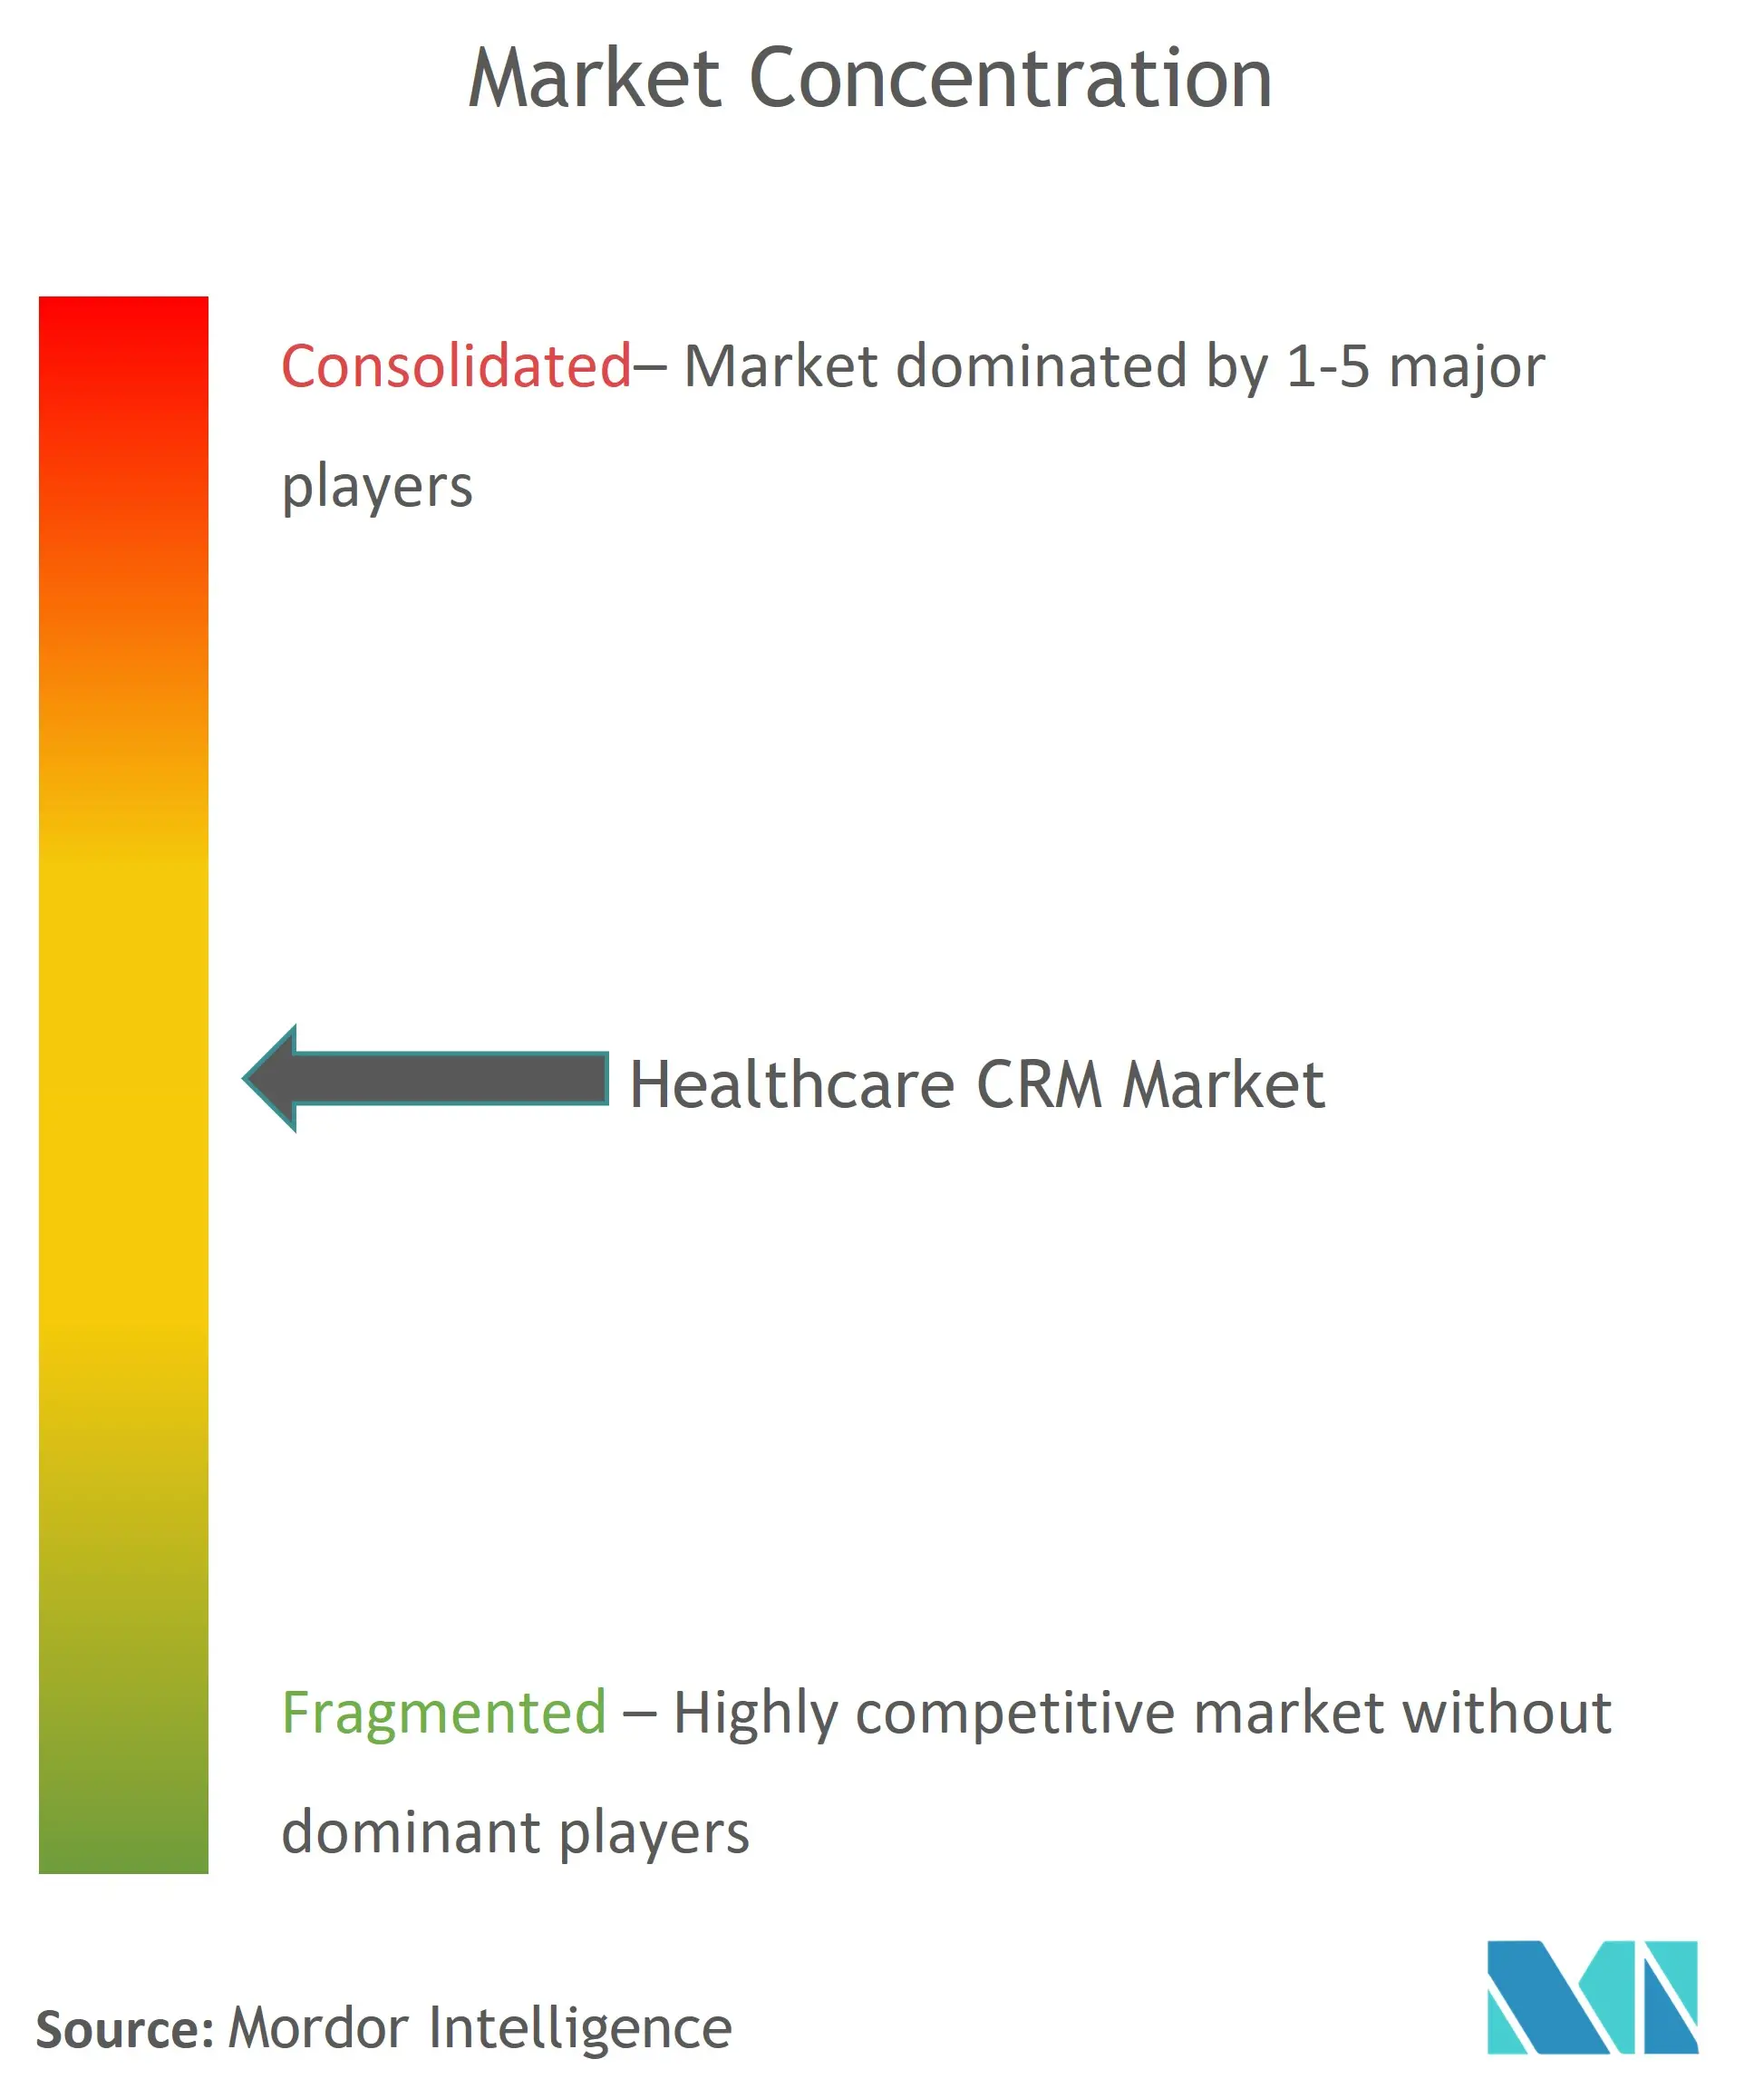 Global Healthcare CRM Market Concentration